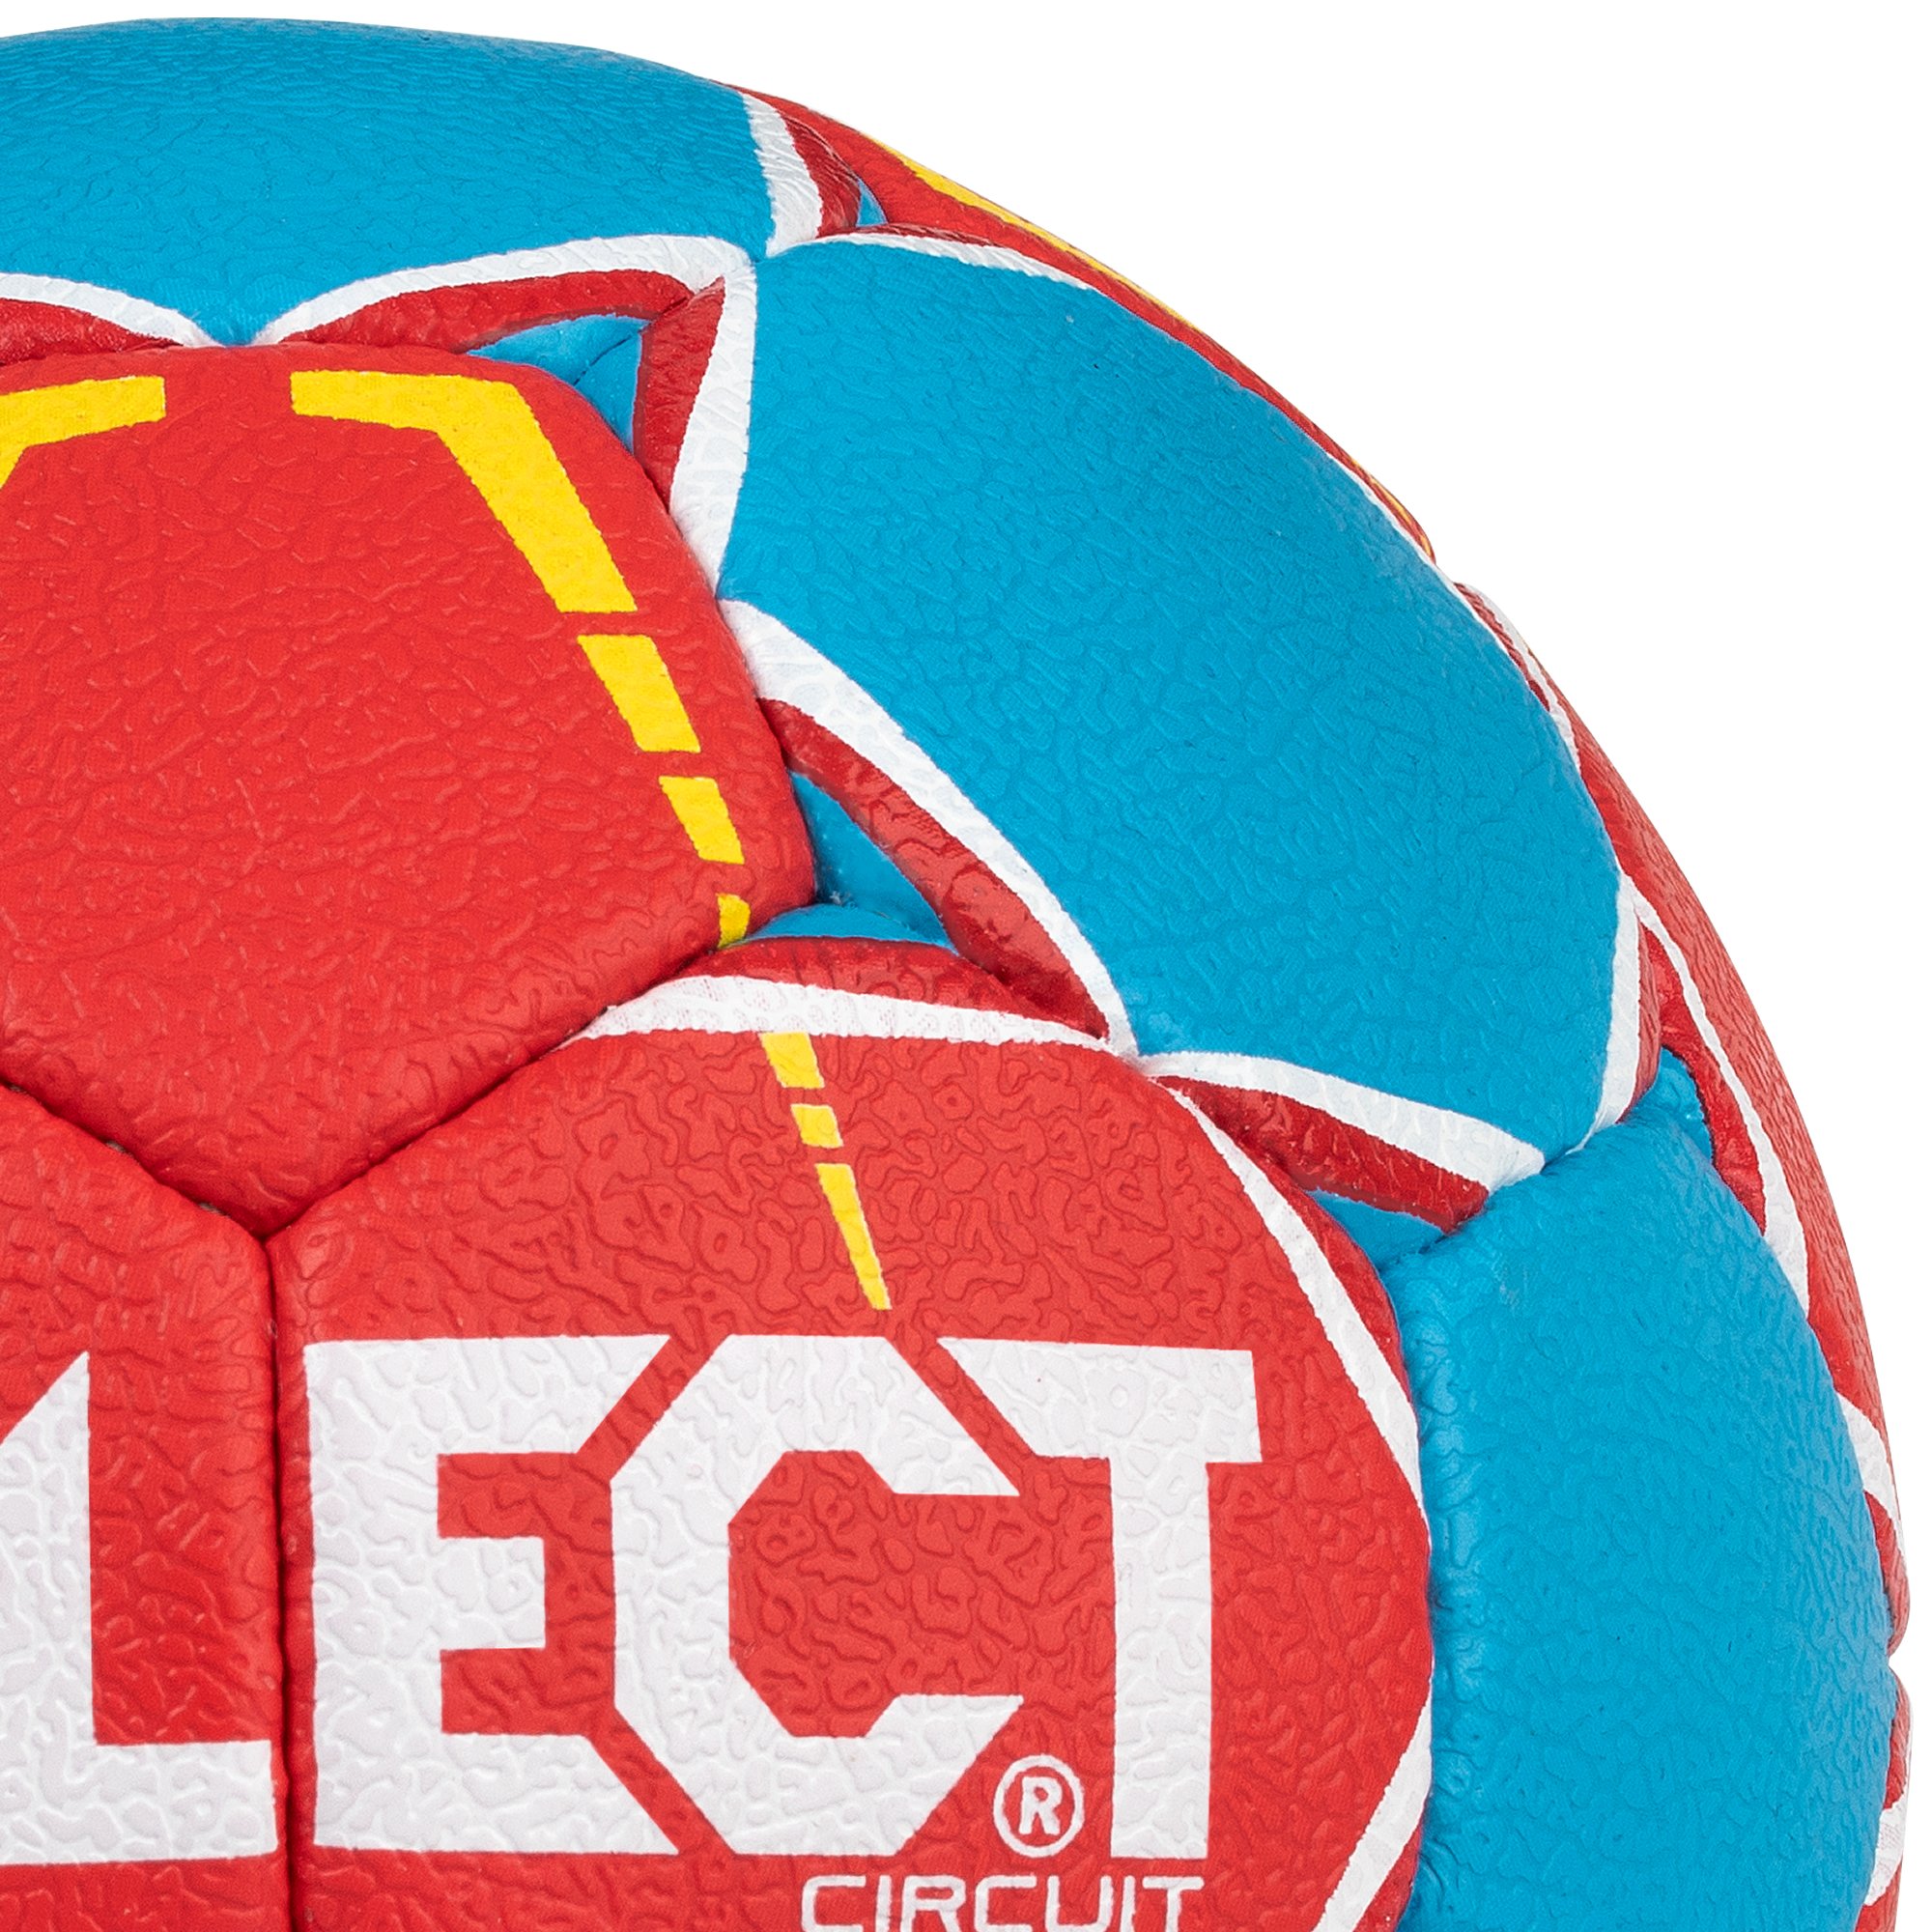 Select Circuit Handball Gewichtsball